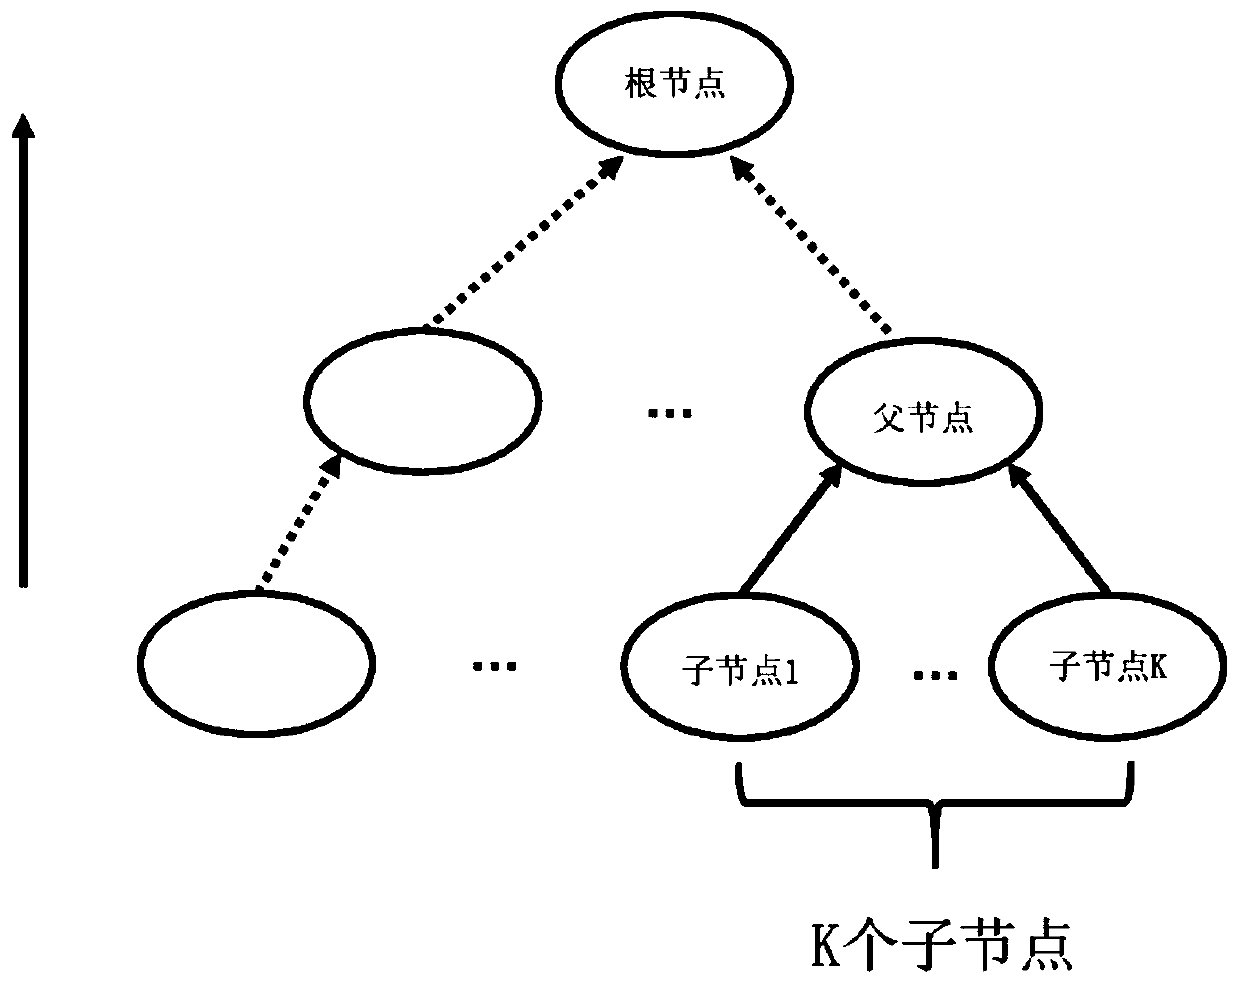 Natural language generation method based on SQL syntax tree node types